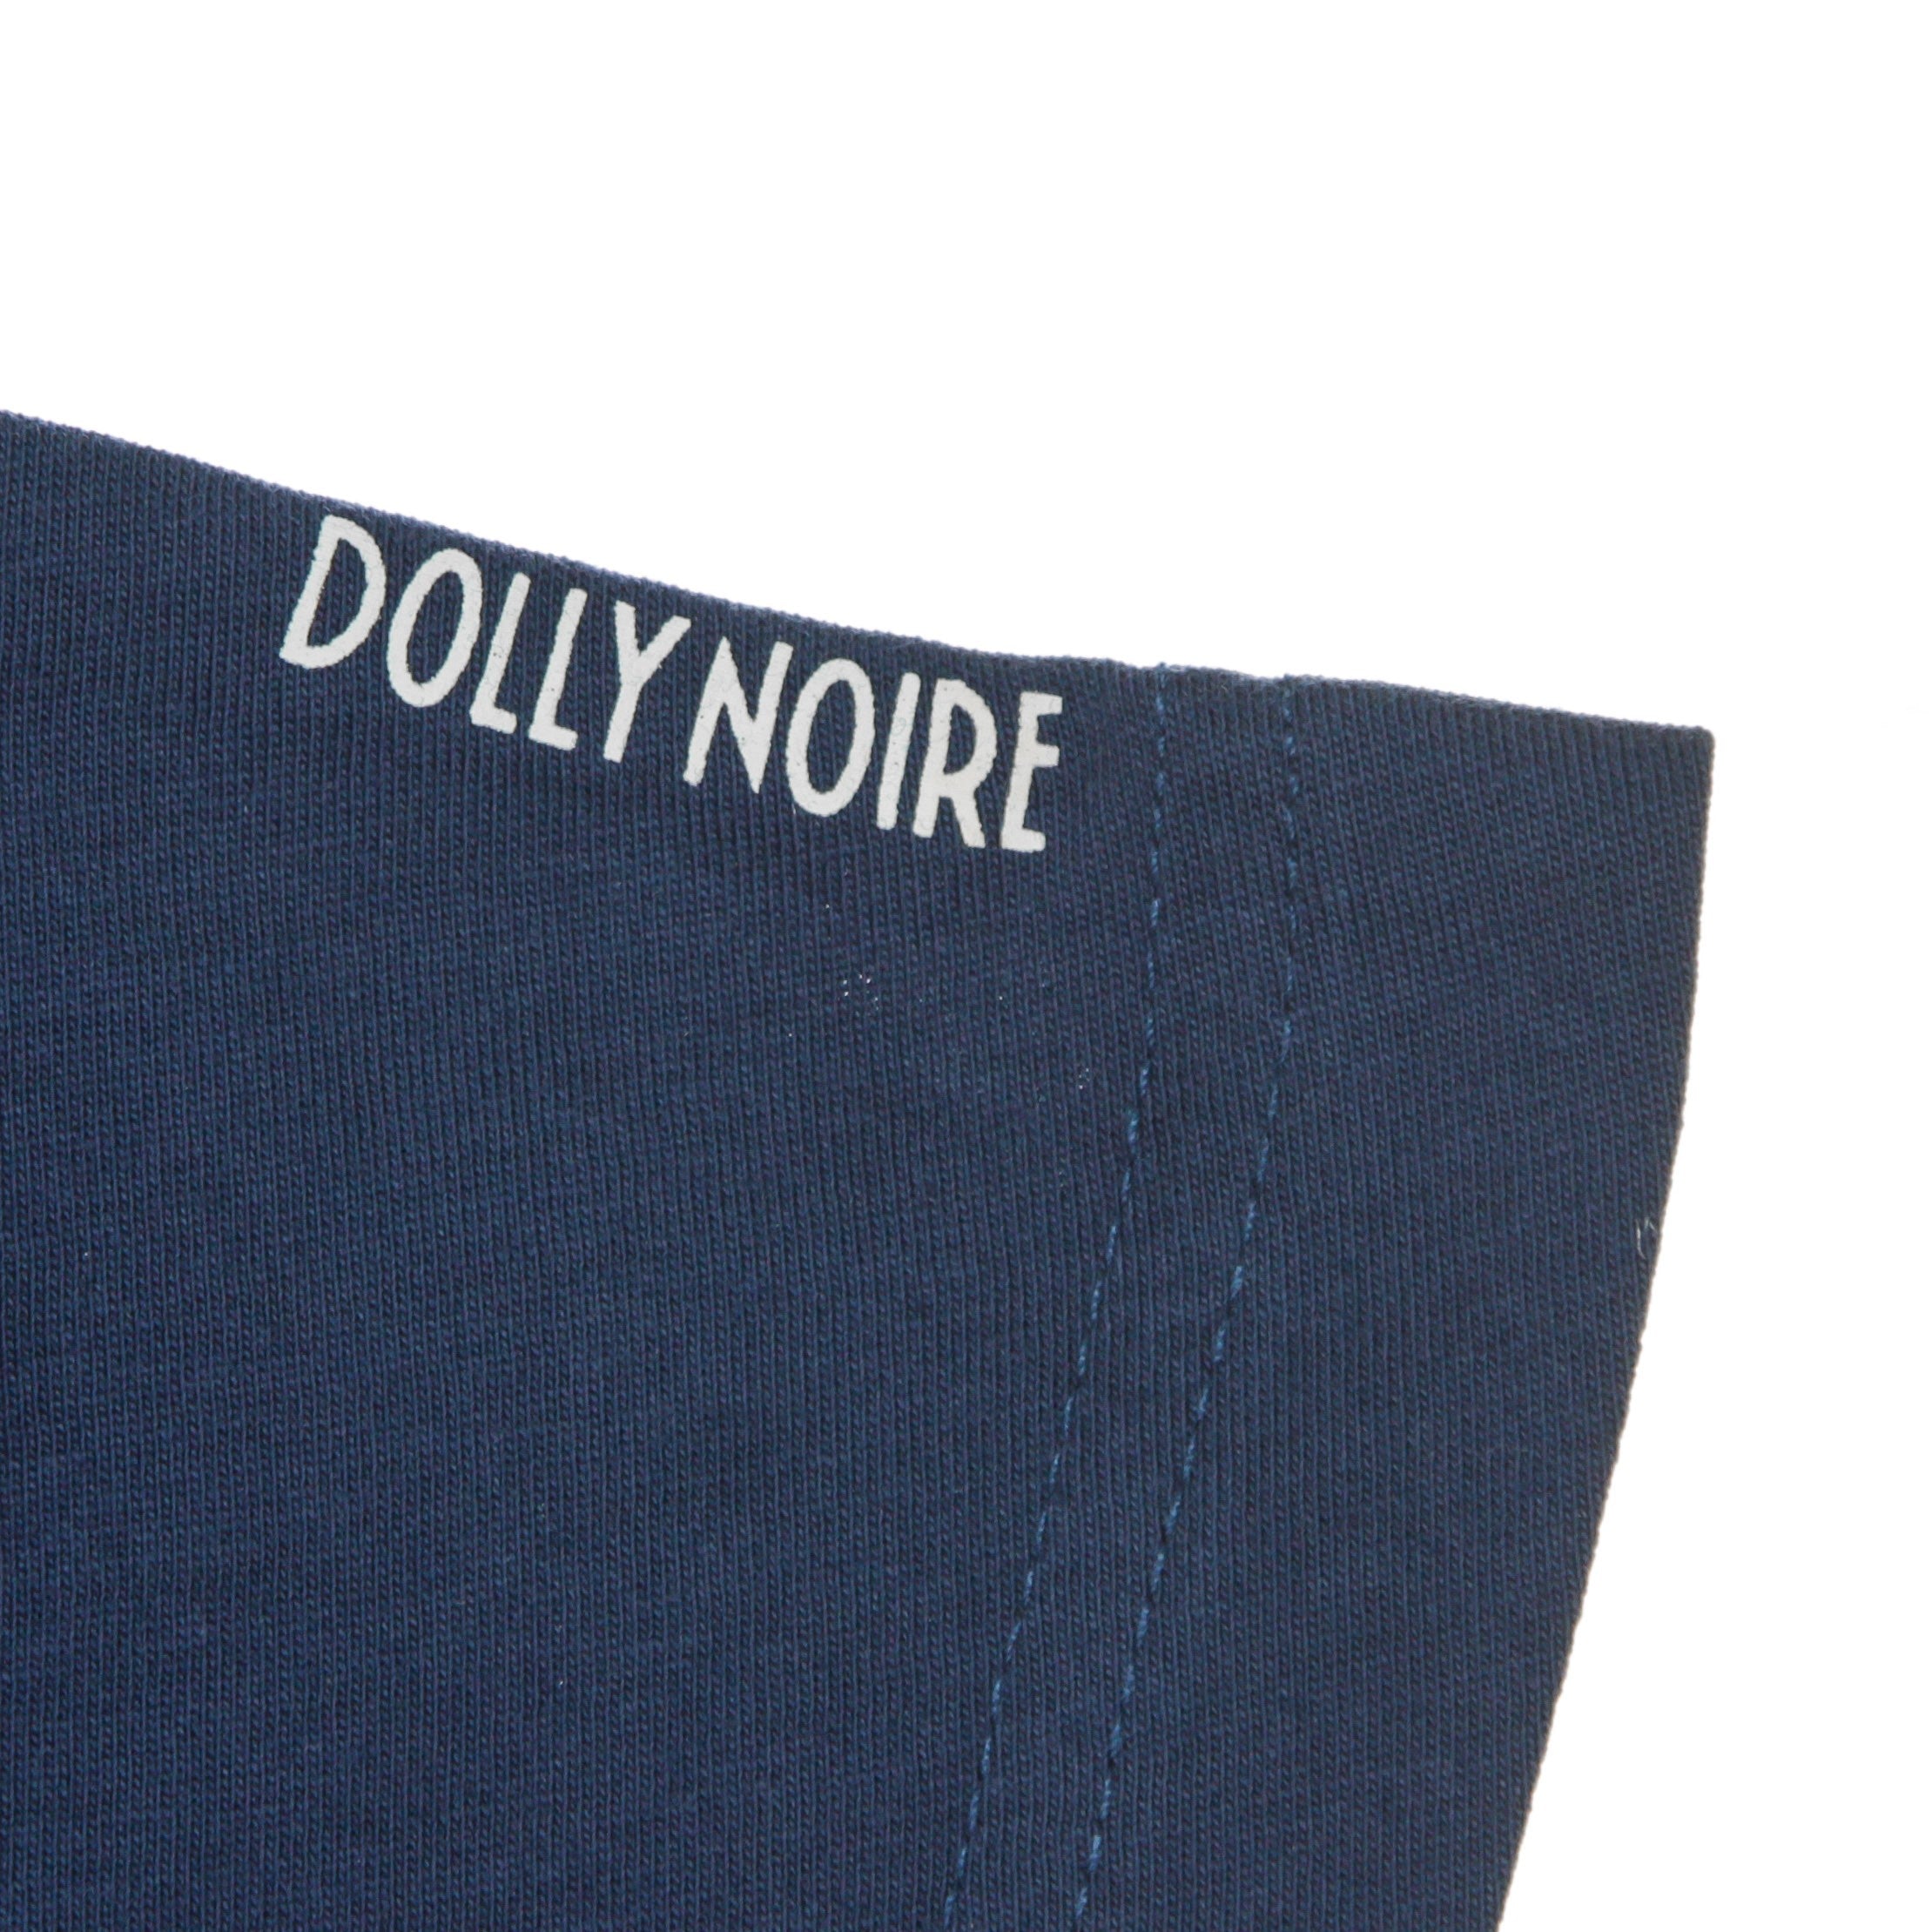 Dolly Noire, Maglietta Corta Donna Akira Long Sleeves Over, 